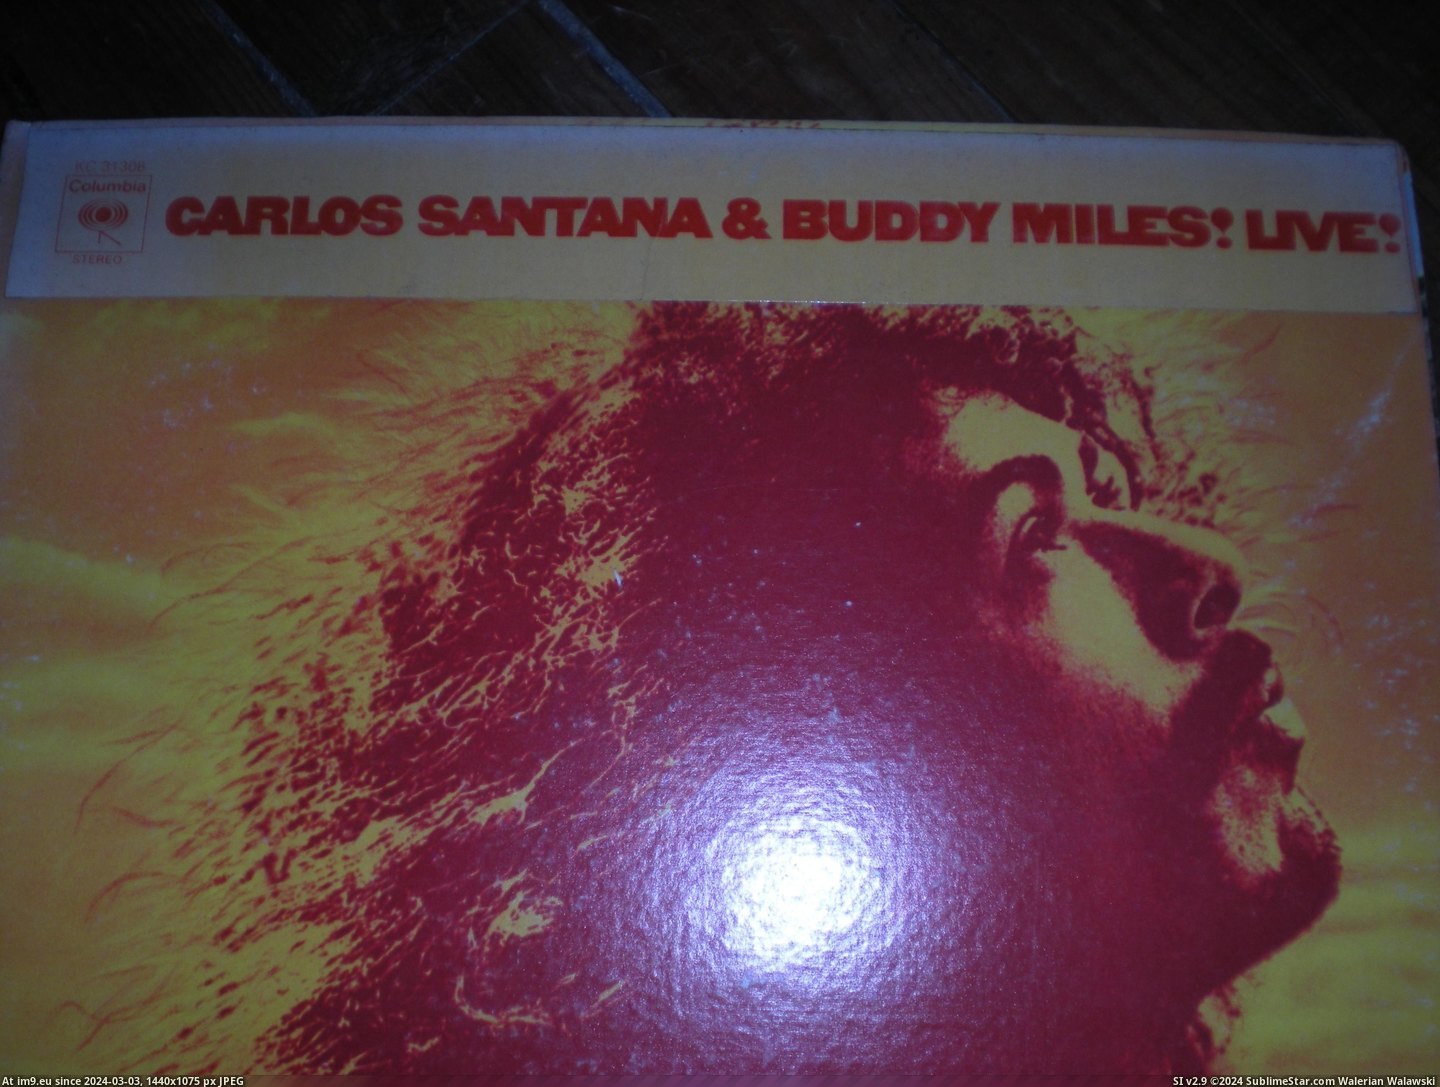 #Buddy #Santana #Miles Santana Buddy Miles 7 Pic. (Изображение из альбом new 1))